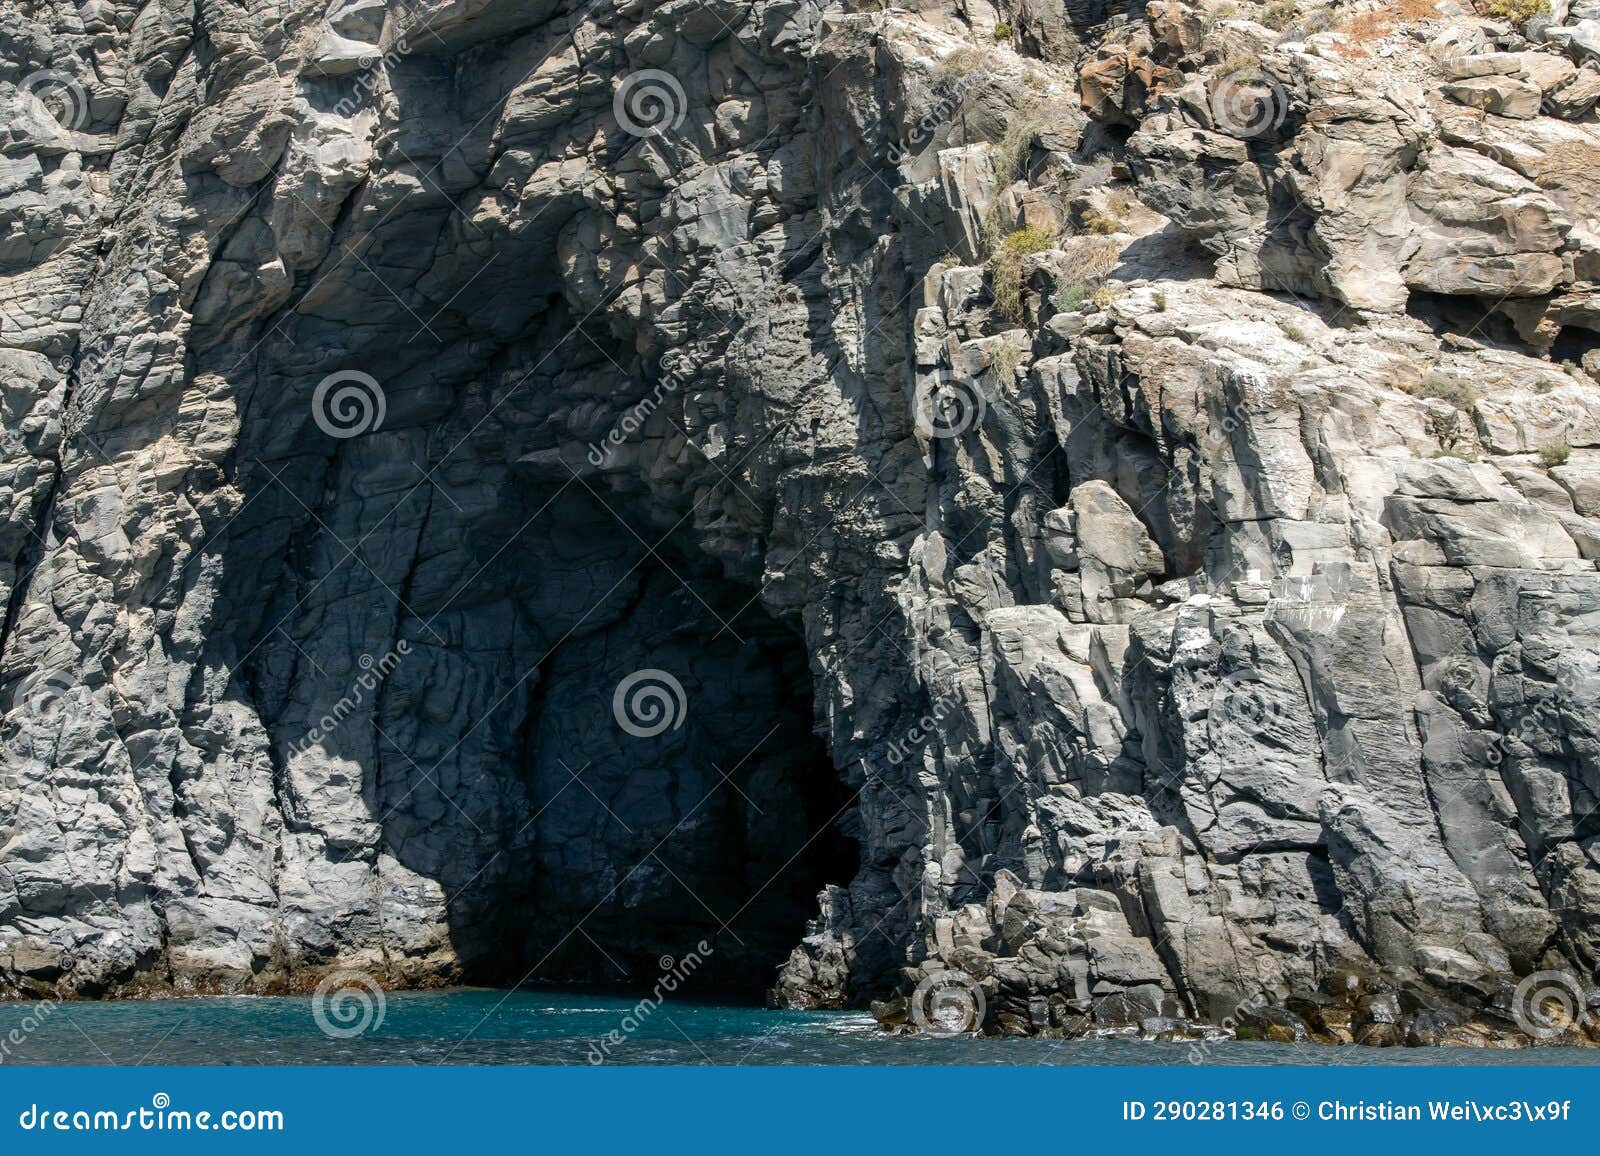 cave at the punto de buceo, tenerife, spain